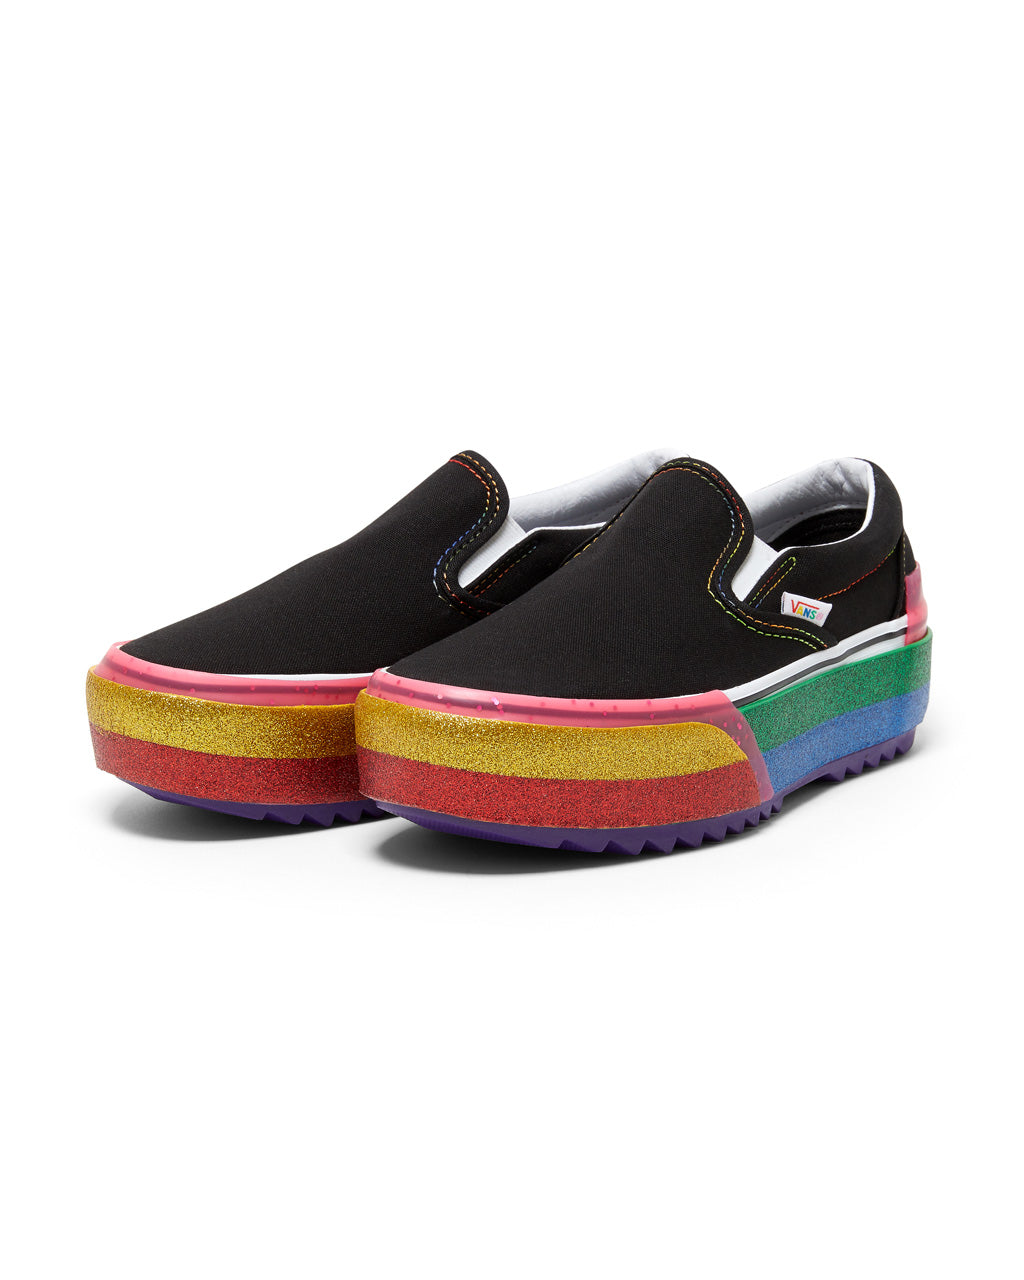 rainbow vans slip on shoes